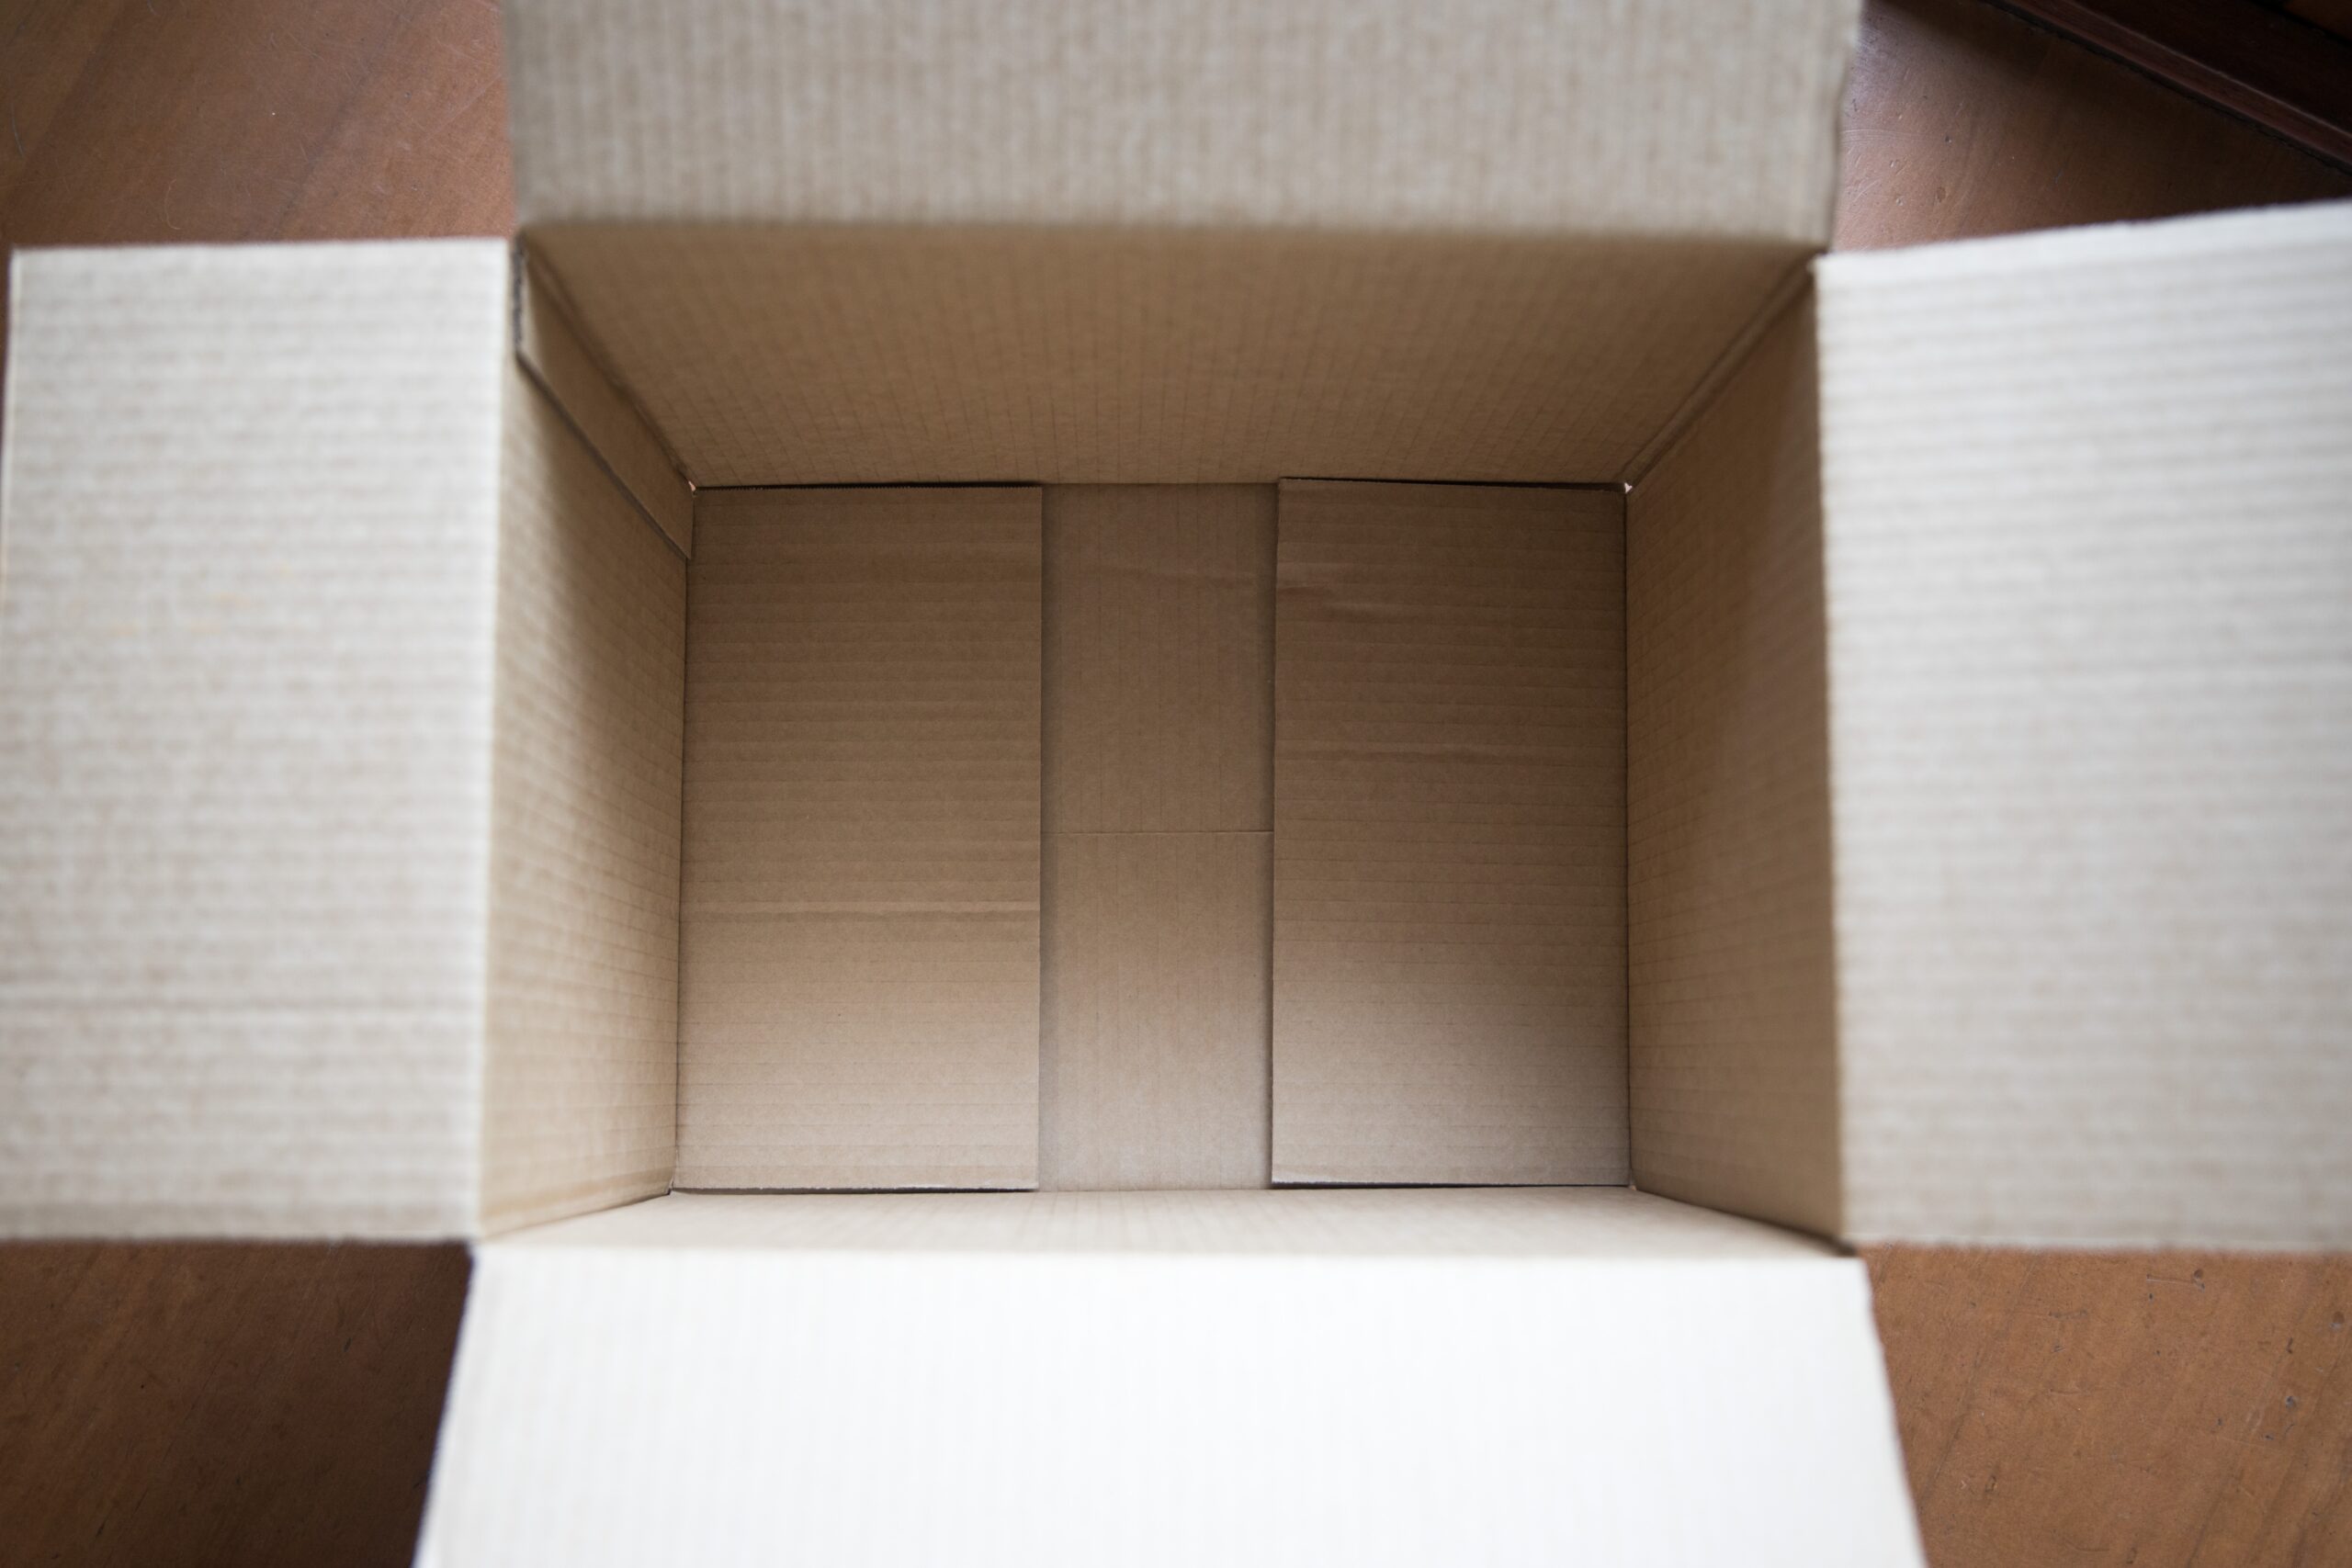 an-empty-box-symbolizing-the-storage-unit-types